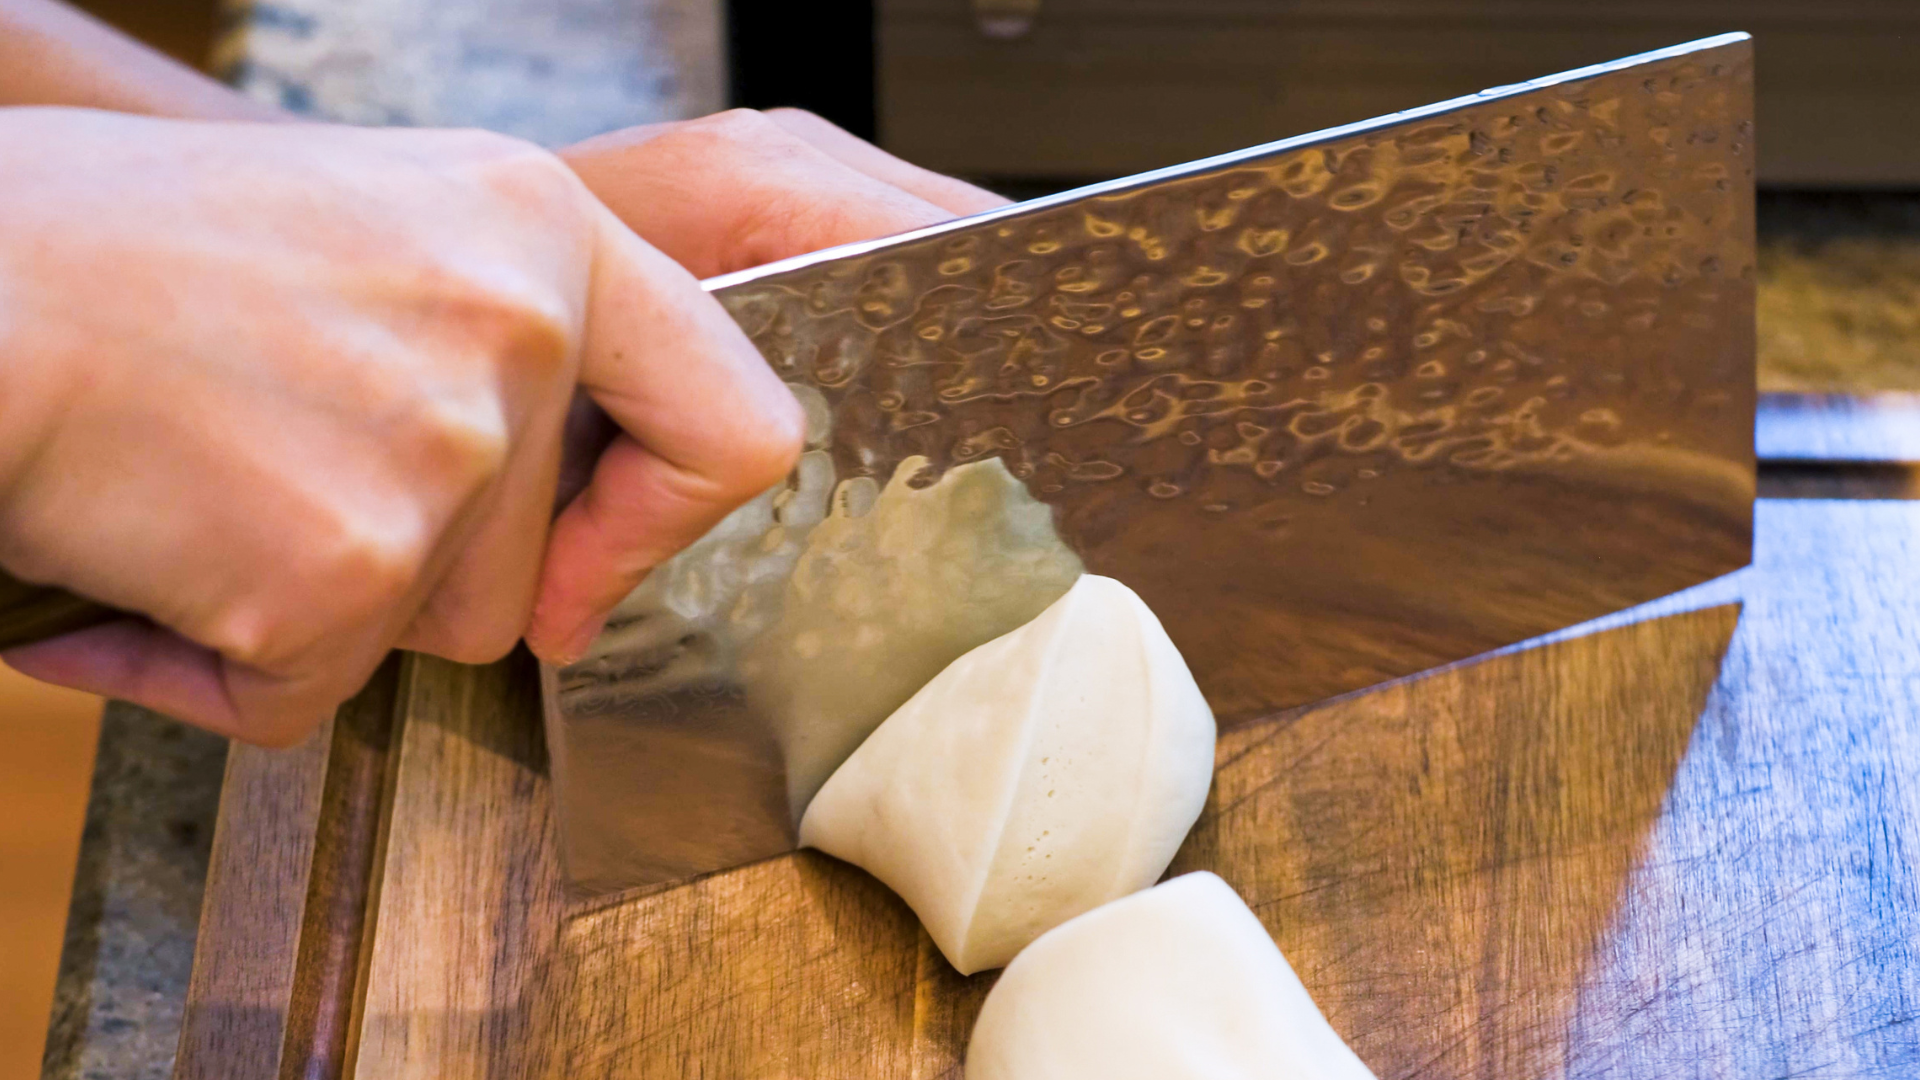 Piece Knife Set Damascus knife Nifes ножик набор ножей для кухни